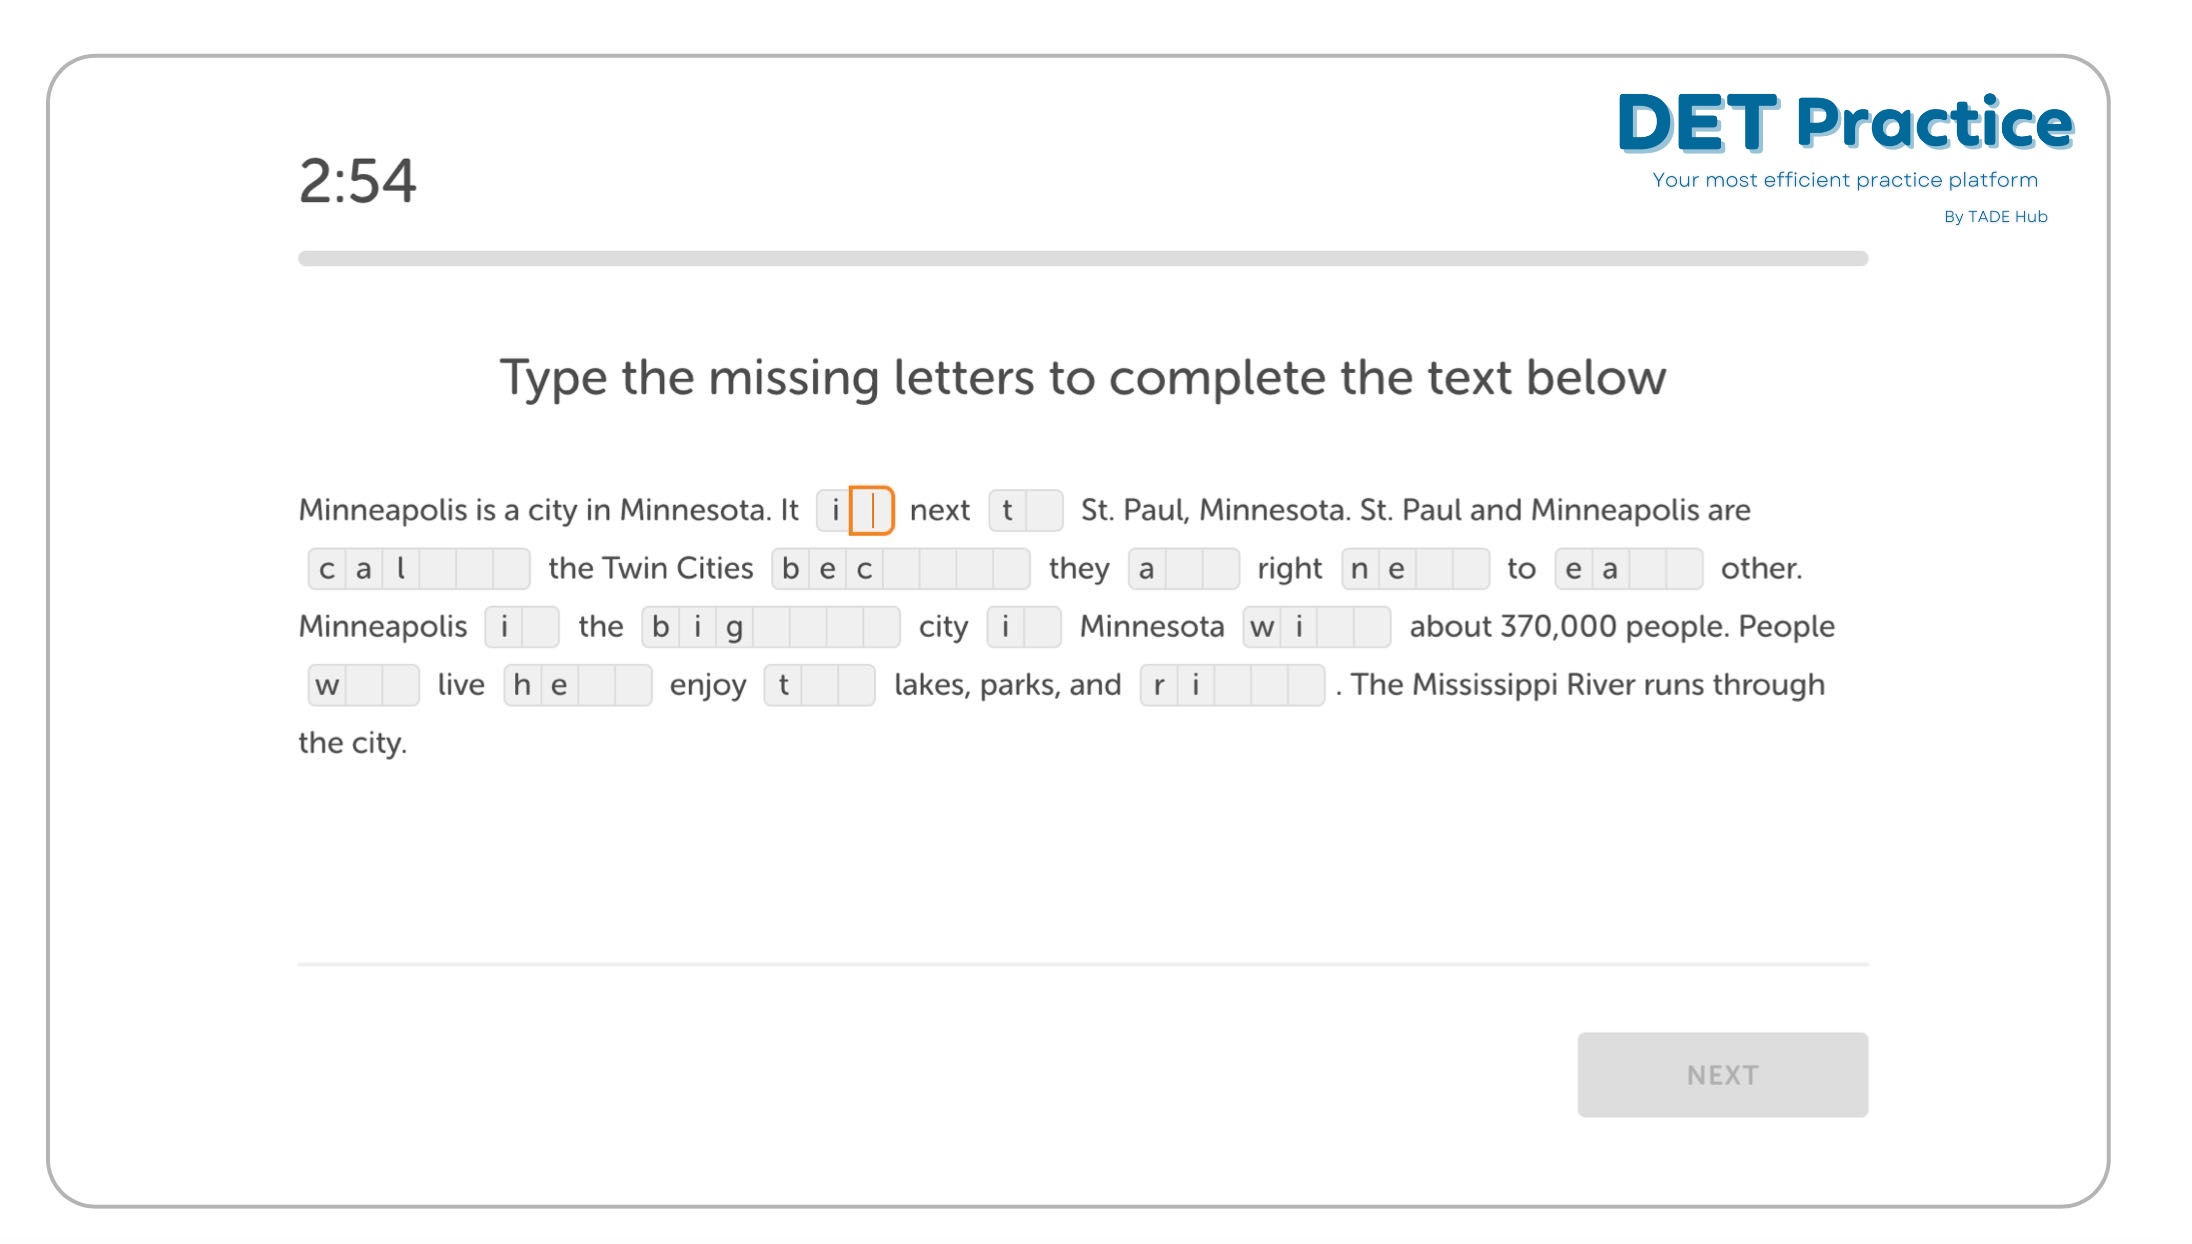 Duolingo Test read and complete, det practice platform, duolingo test preparation, duolingo question type